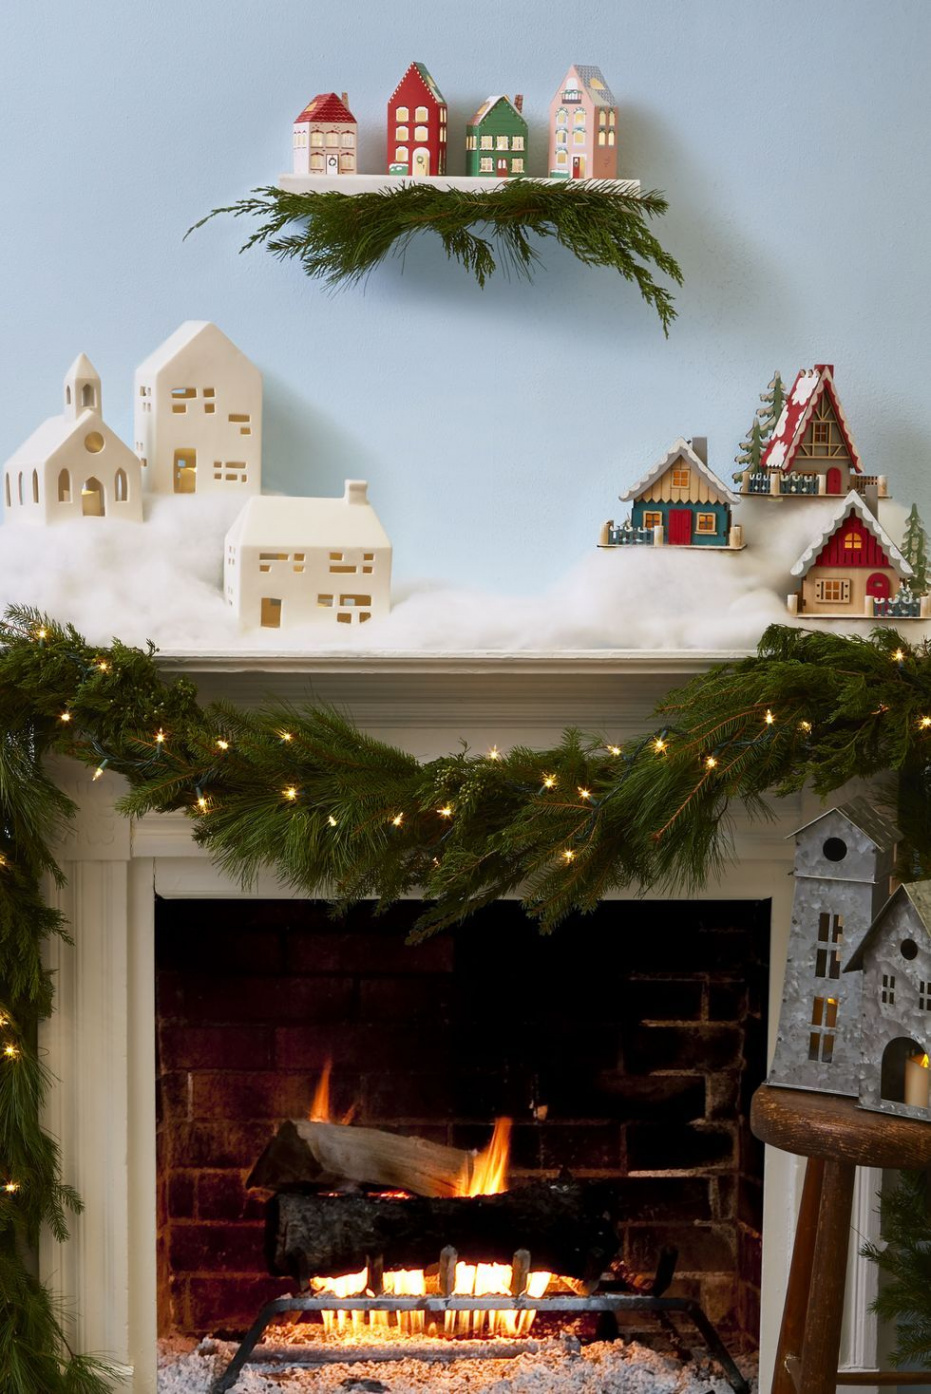 Best DIY Christmas Decorations - Easy Homemade Holiday Decor